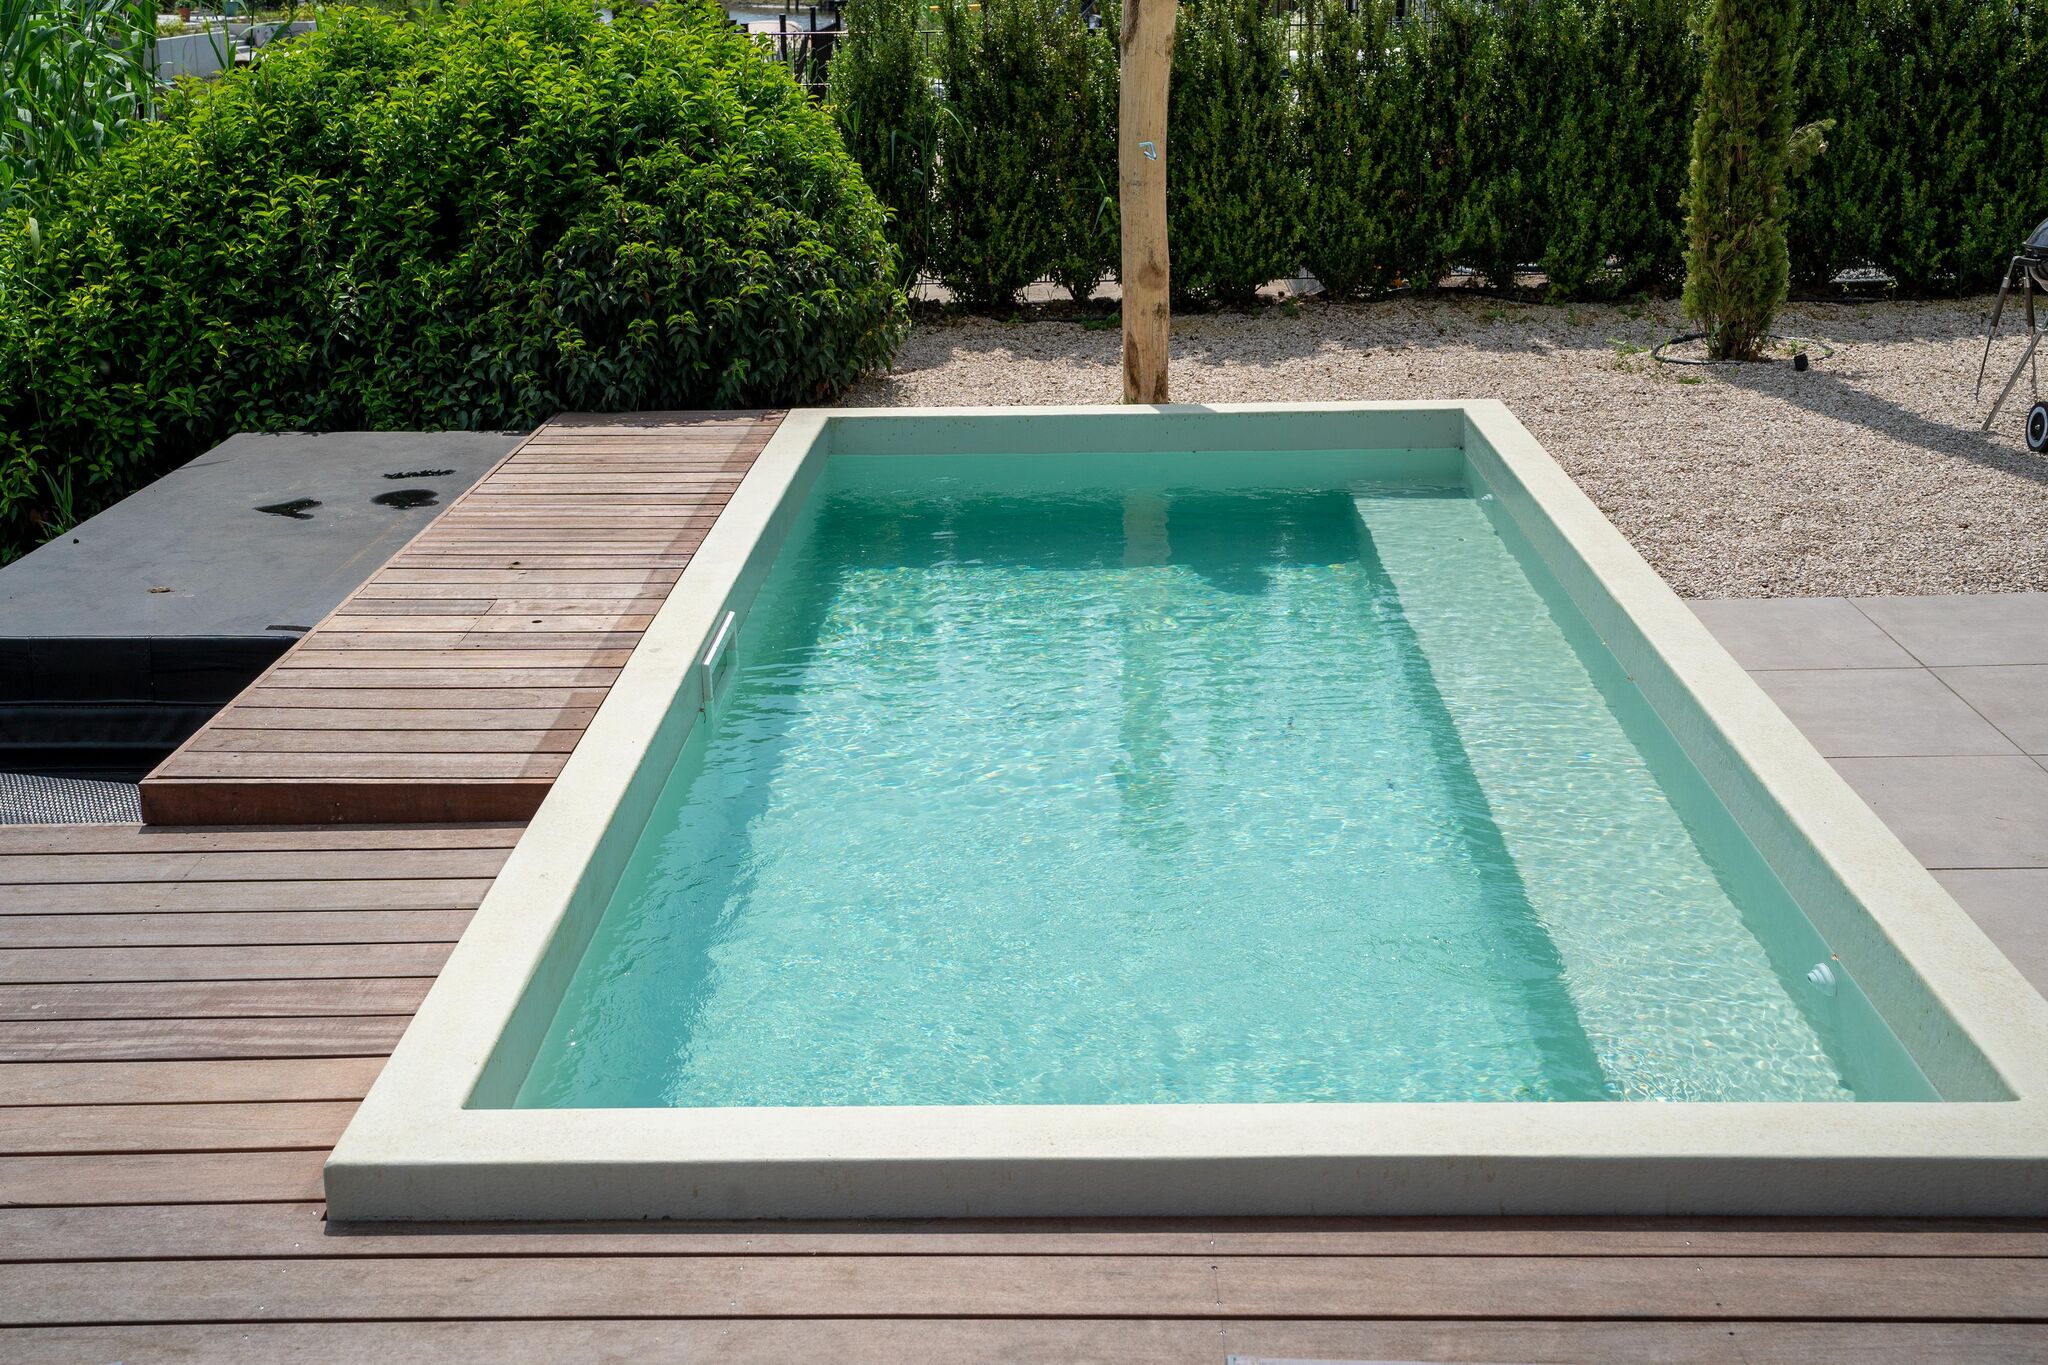 Villa with sauna and heated pool near Harderwijk